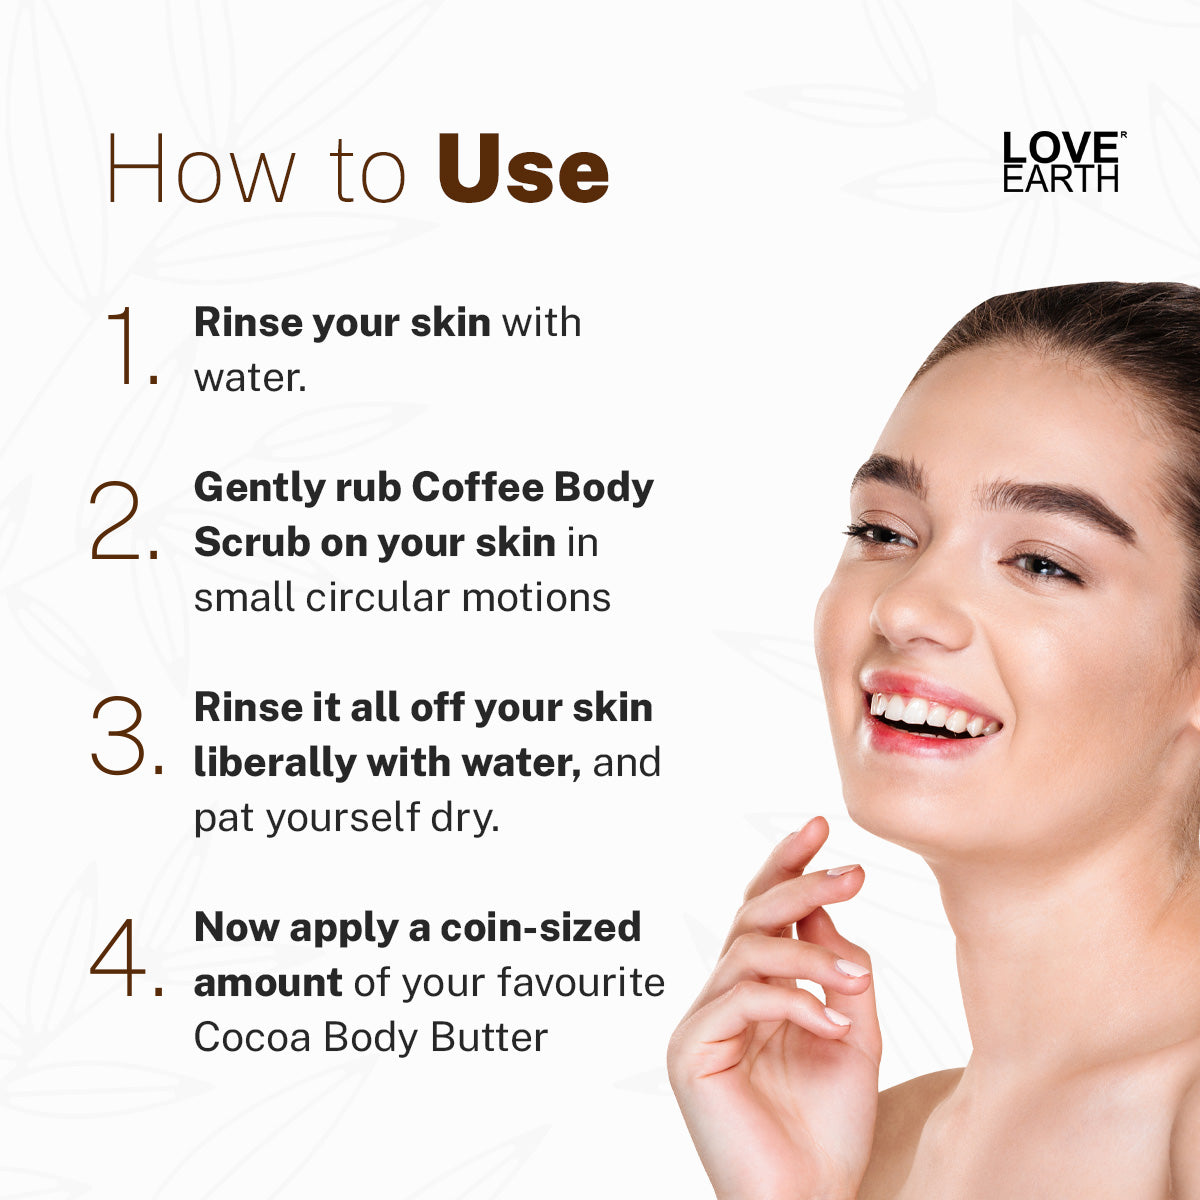 Body Polish Kit – Coffee Body Scrub & Cocoa Body Butter